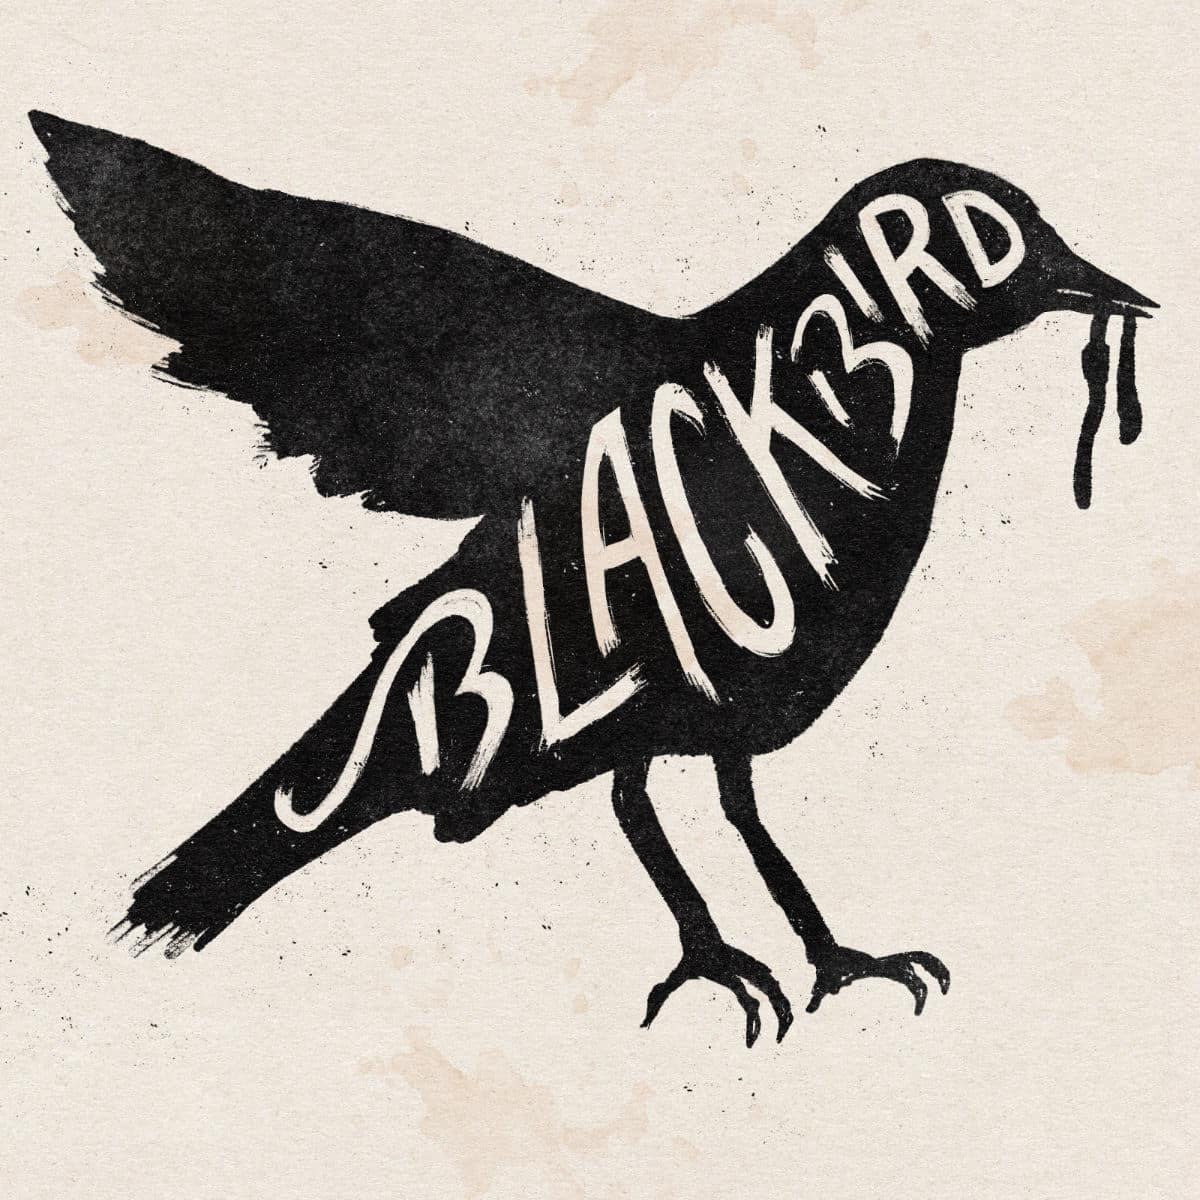 Blackbird – The Beatles – Lettering Michael Leonhartsberger